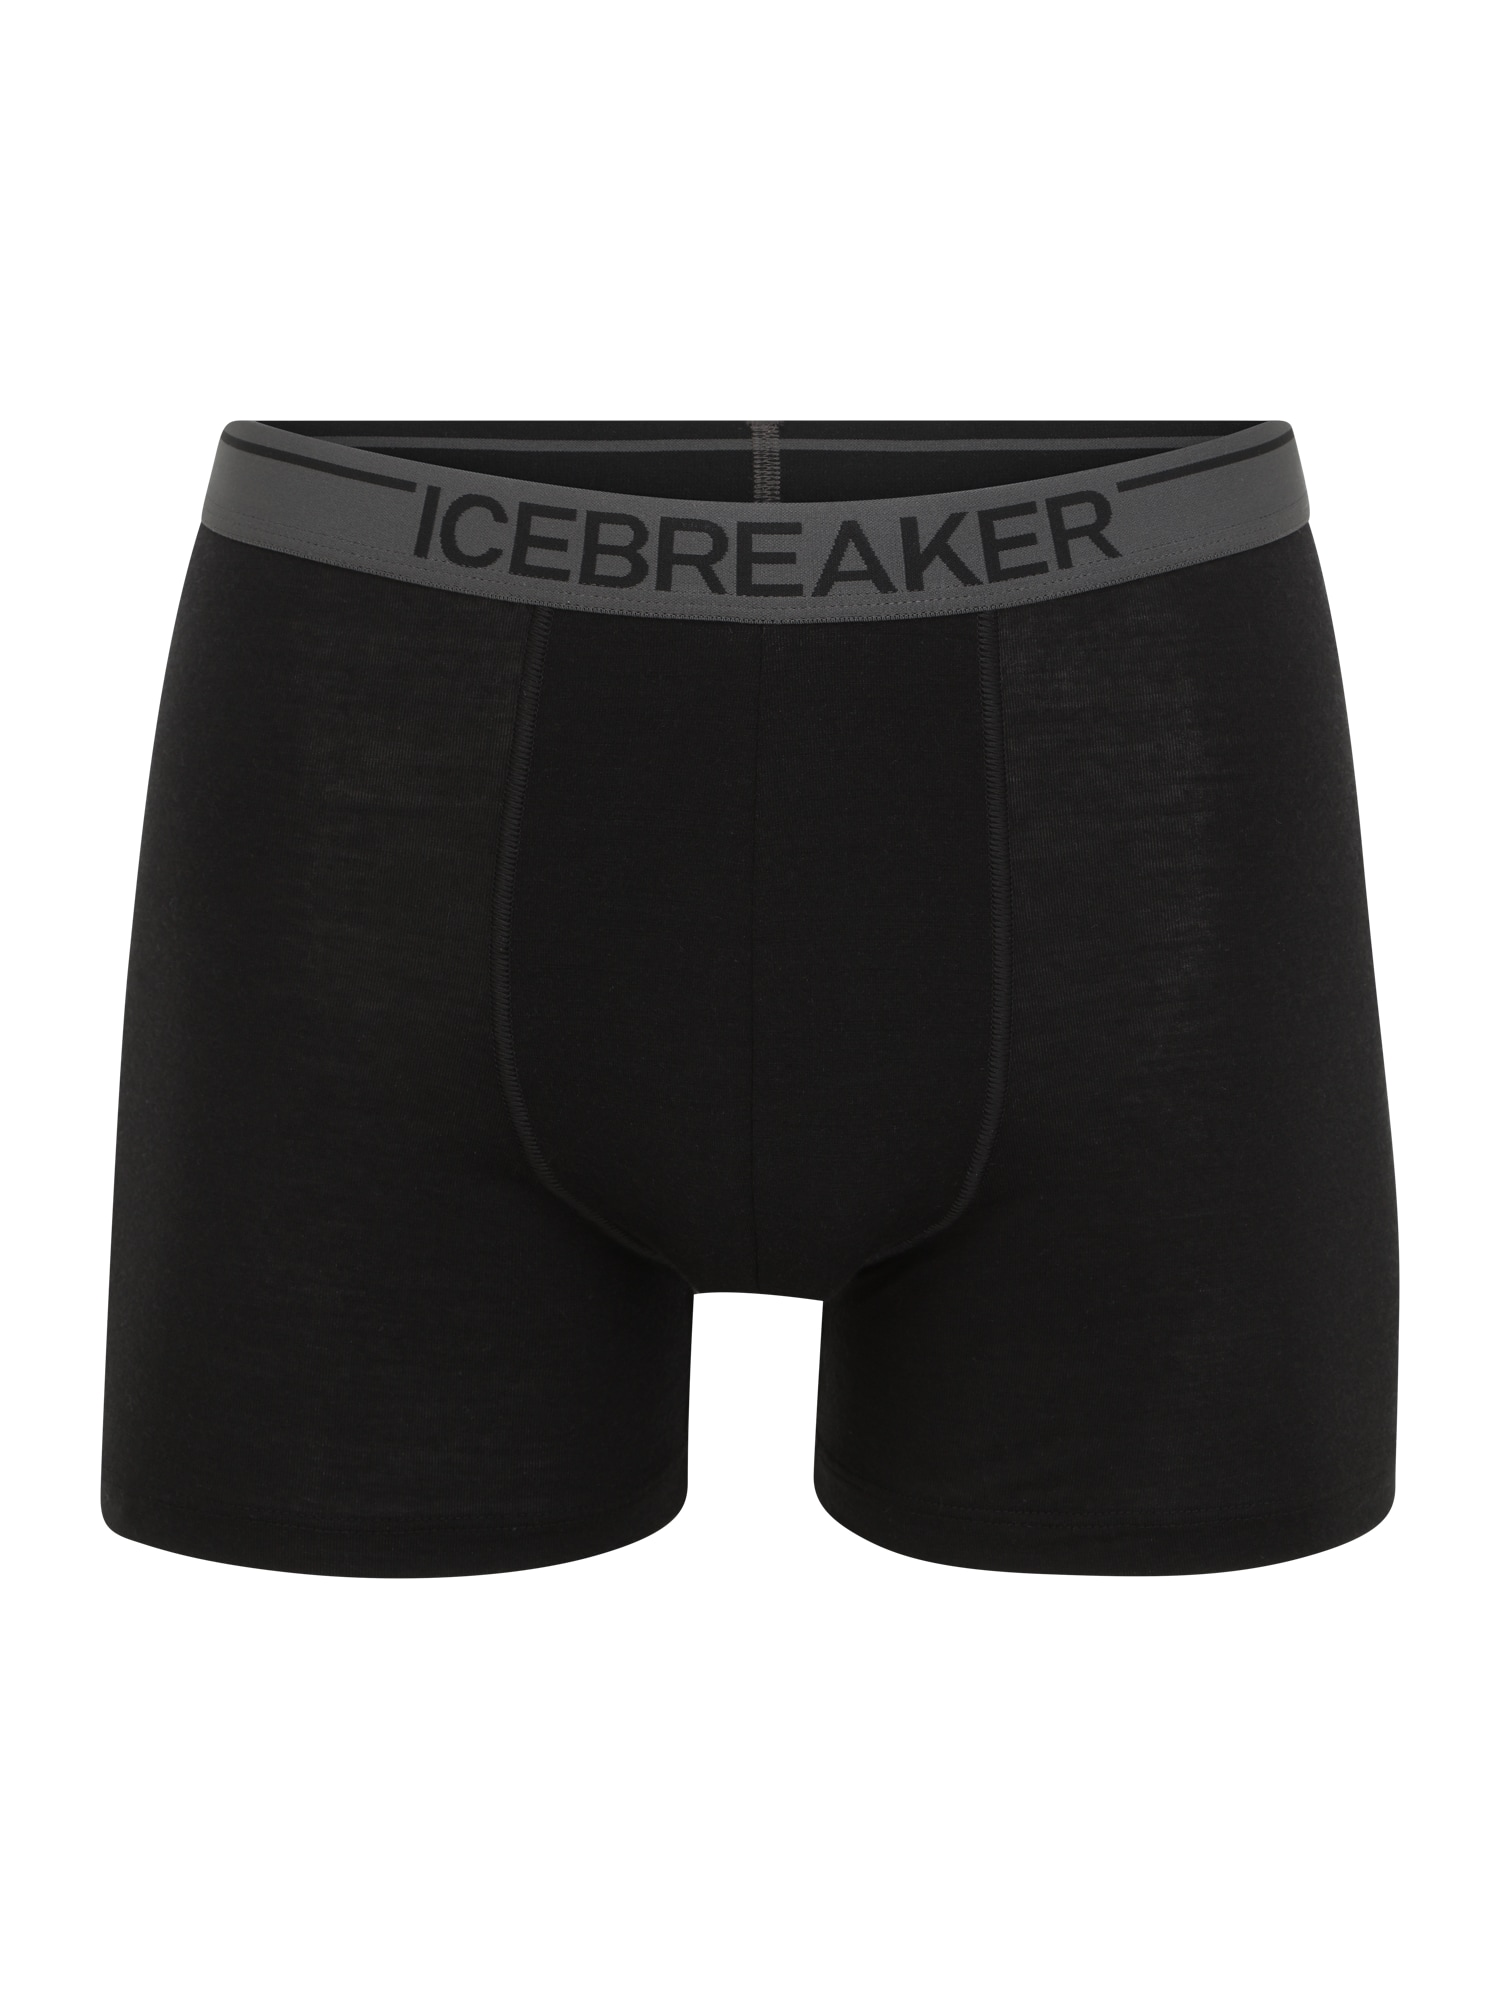 ICEBREAKER Sport alsónadrágok 'Anatomica'  fekete / szürke